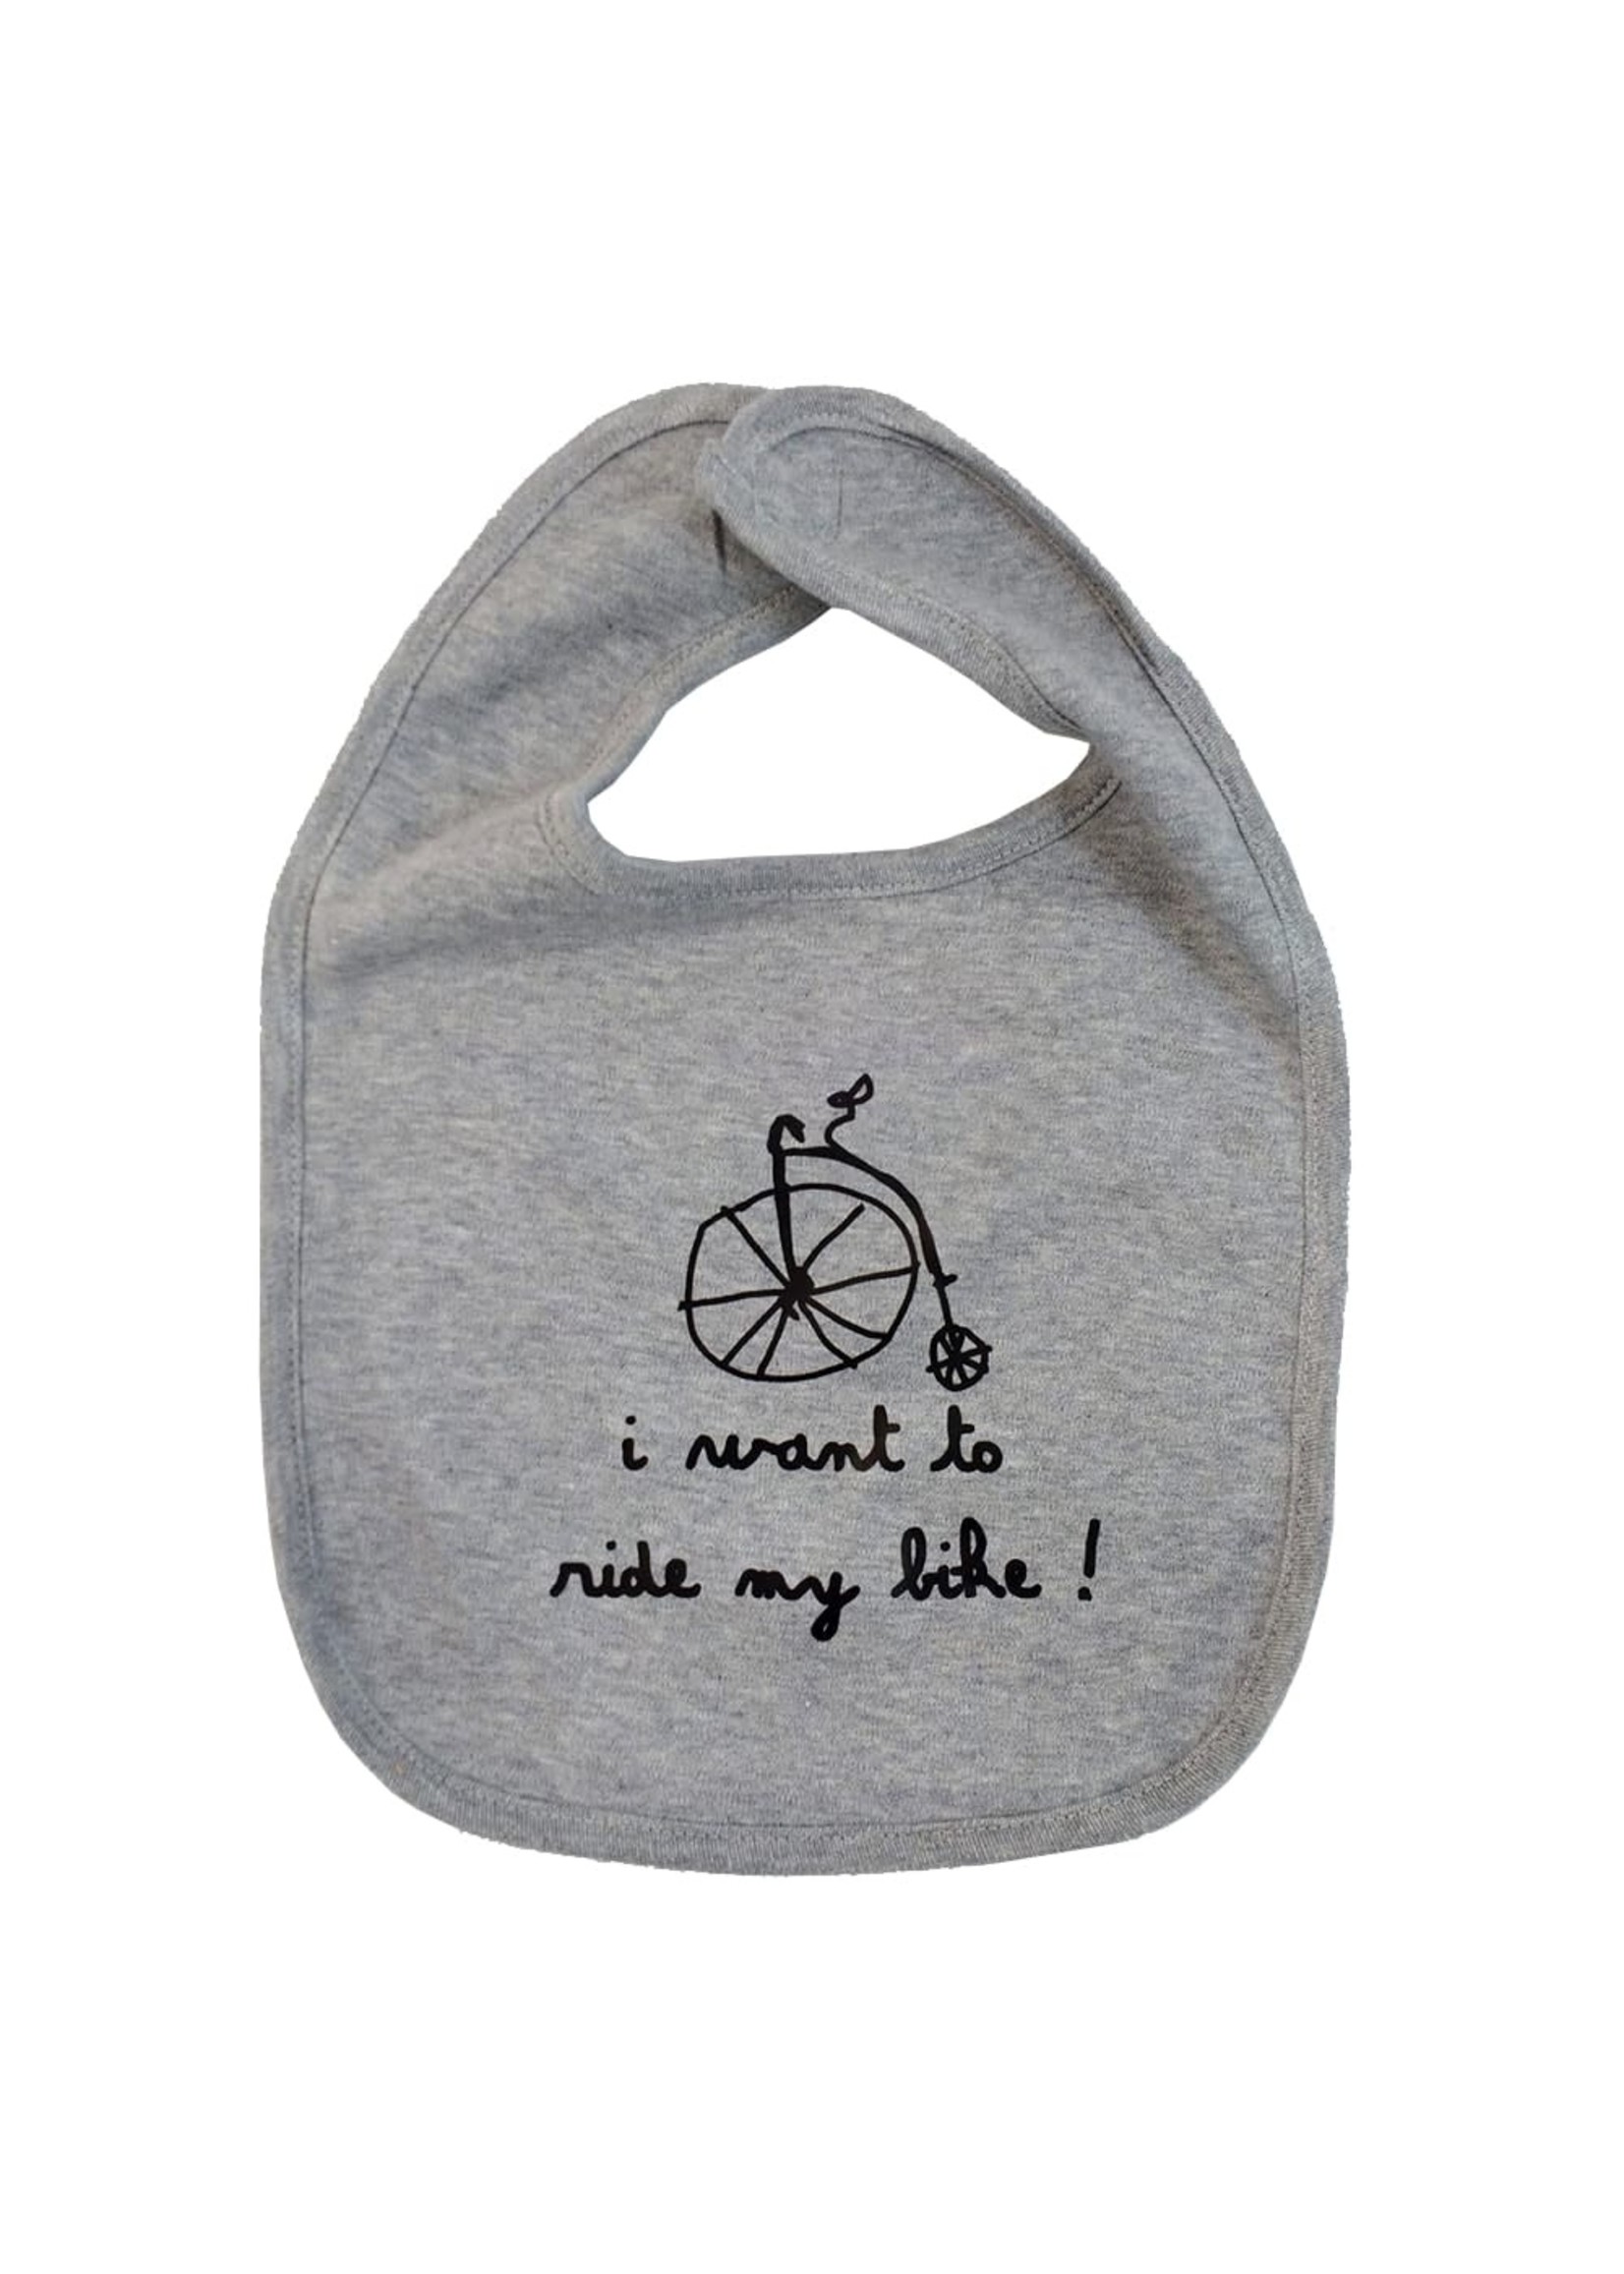 The Vandal Ride My Bike - Baby Slabber